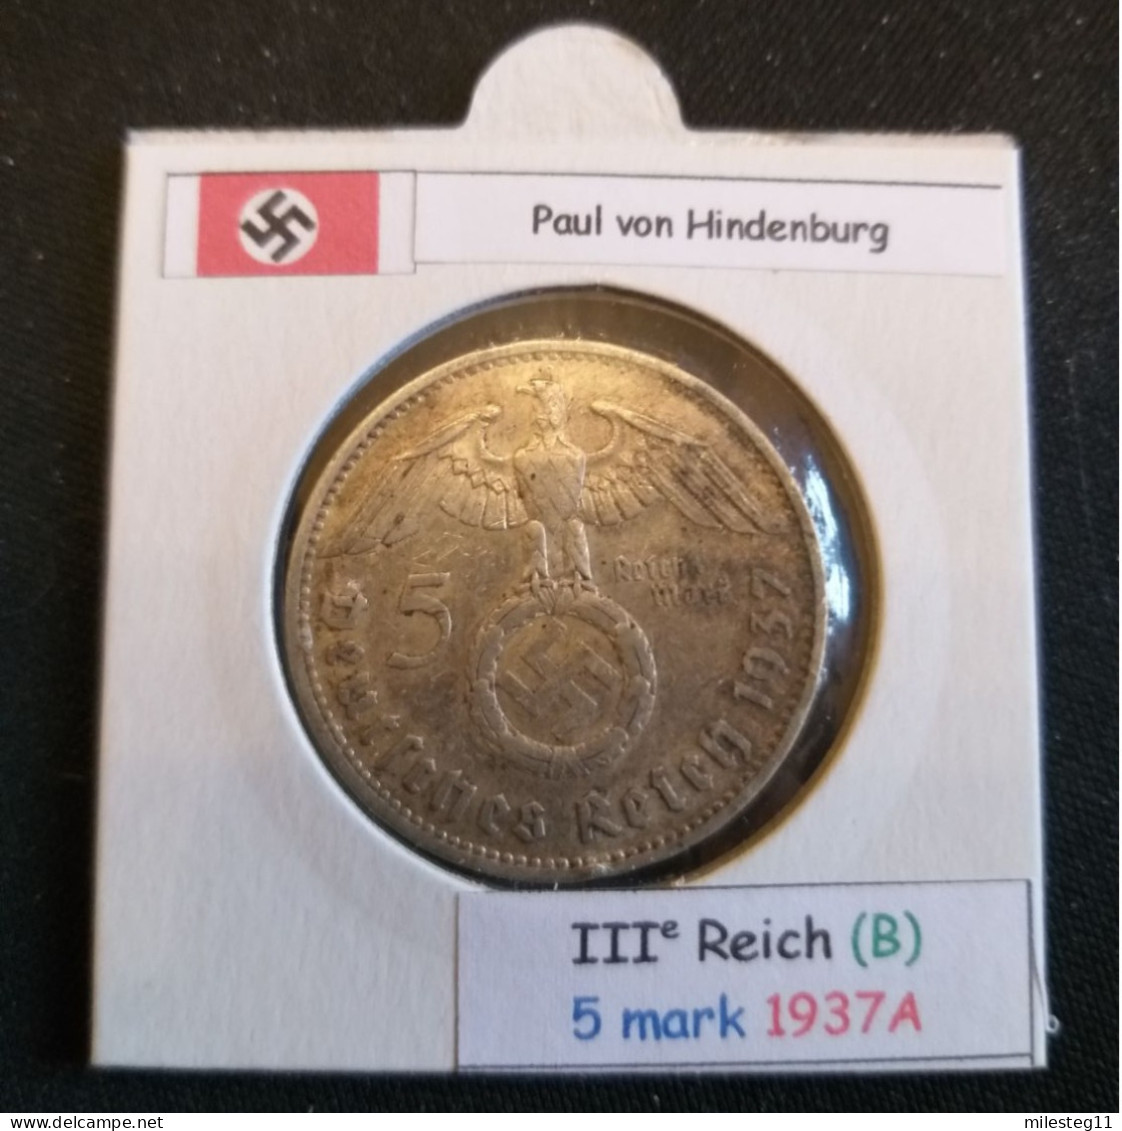 Pièce De 5 Reichsmark De 1937A (Berlin) Paul Von Hindenburg (position B) - 5 Reichsmark